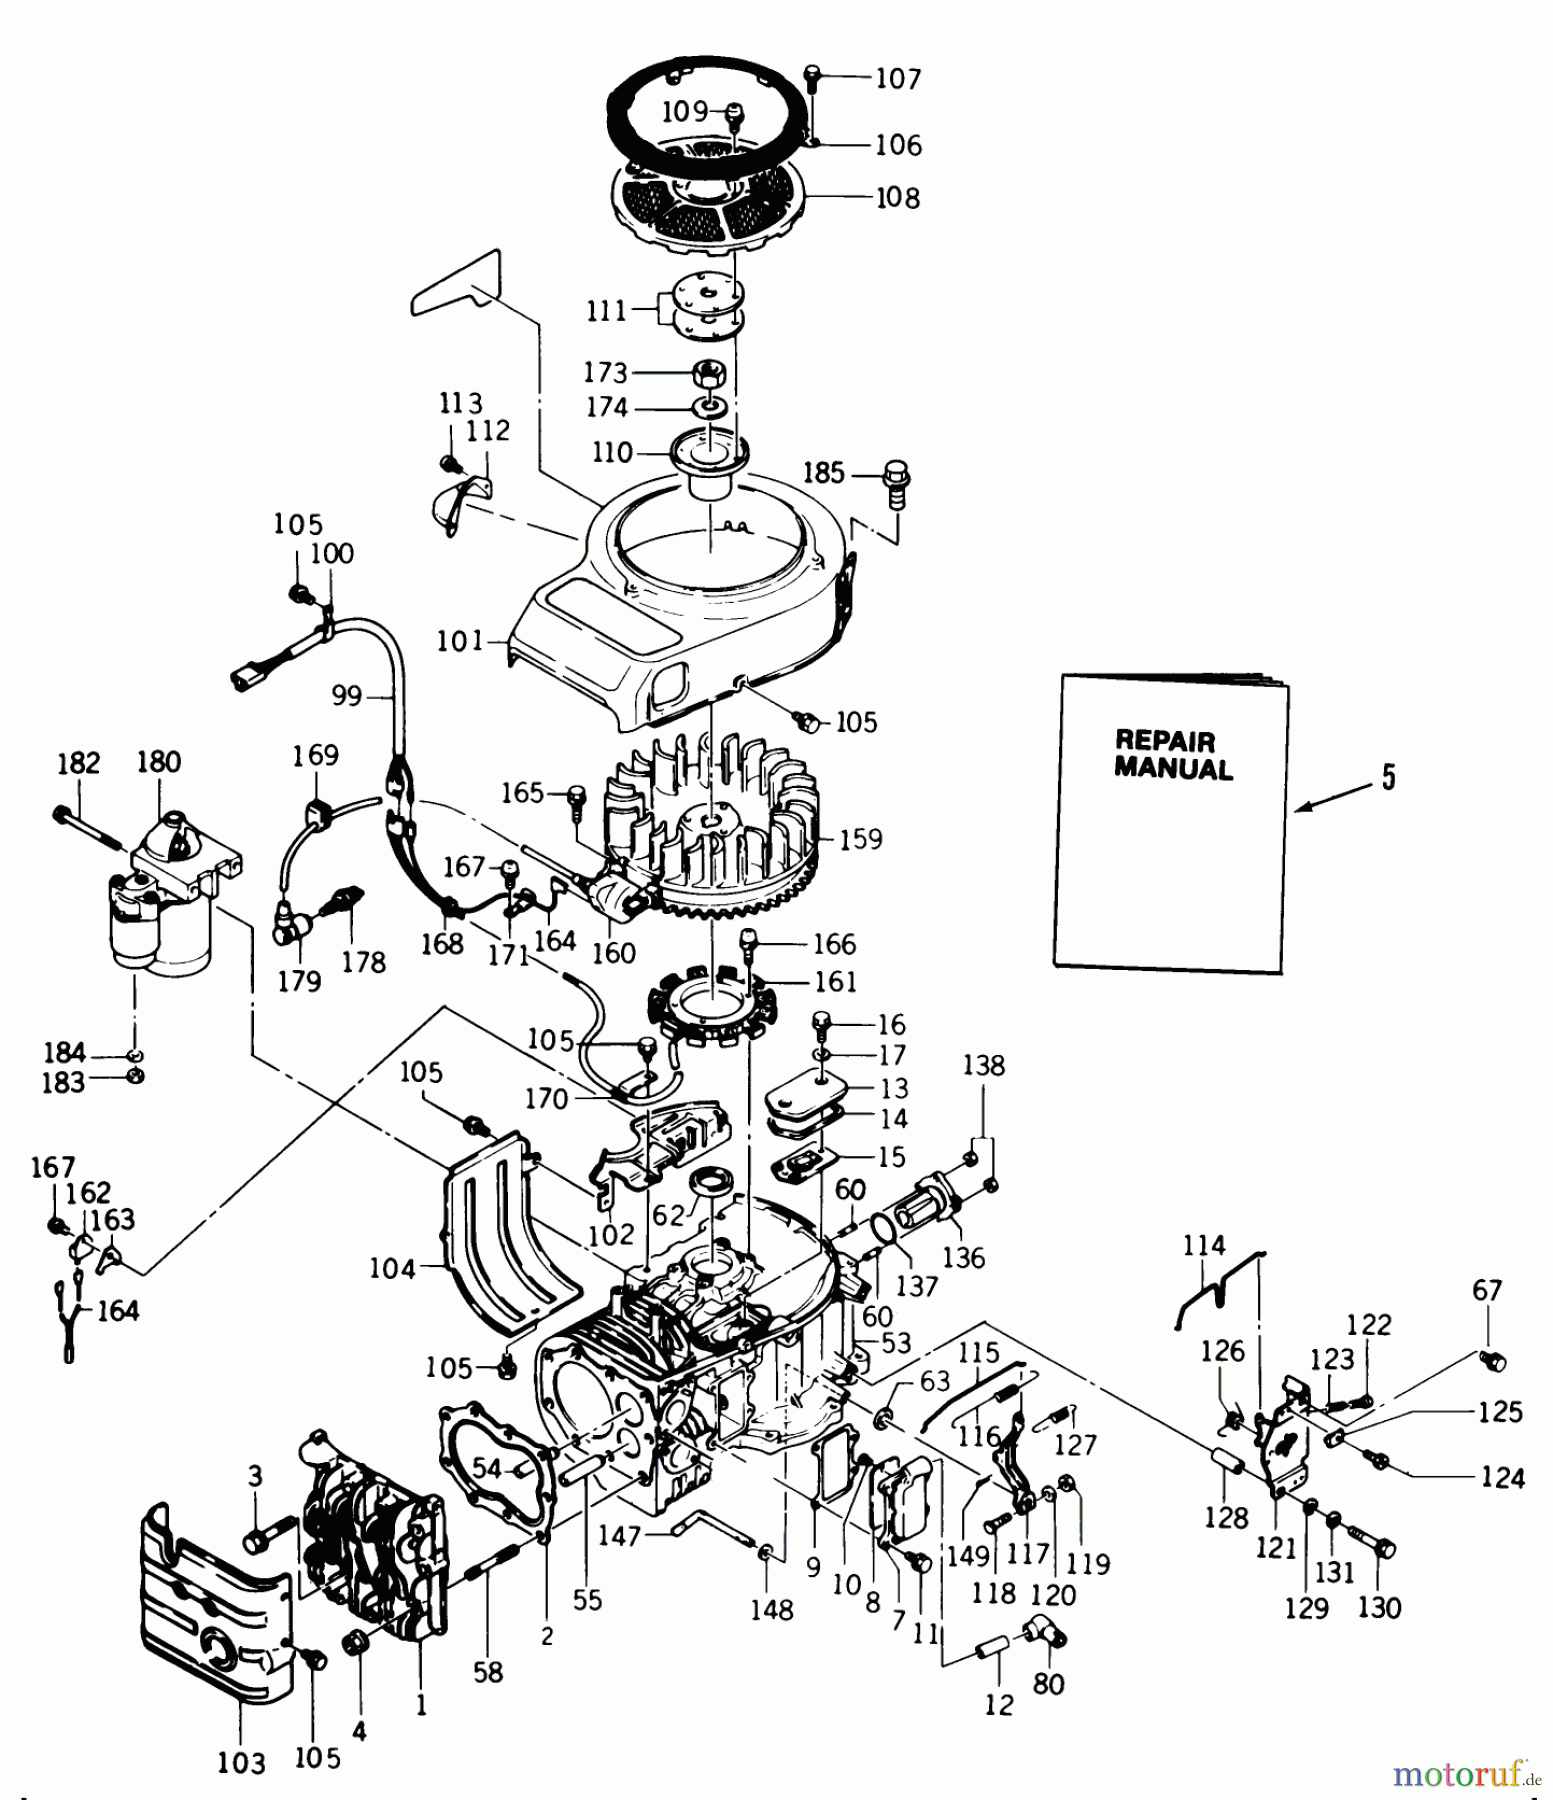  Toro Neu Mowers, Lawn & Garden Tractor Seite 1 22-13KE02 (252-H) - Toro 252-H Tractor, 1989 KAWASAKI FB460V TYPE BS-26 ENGINE #1